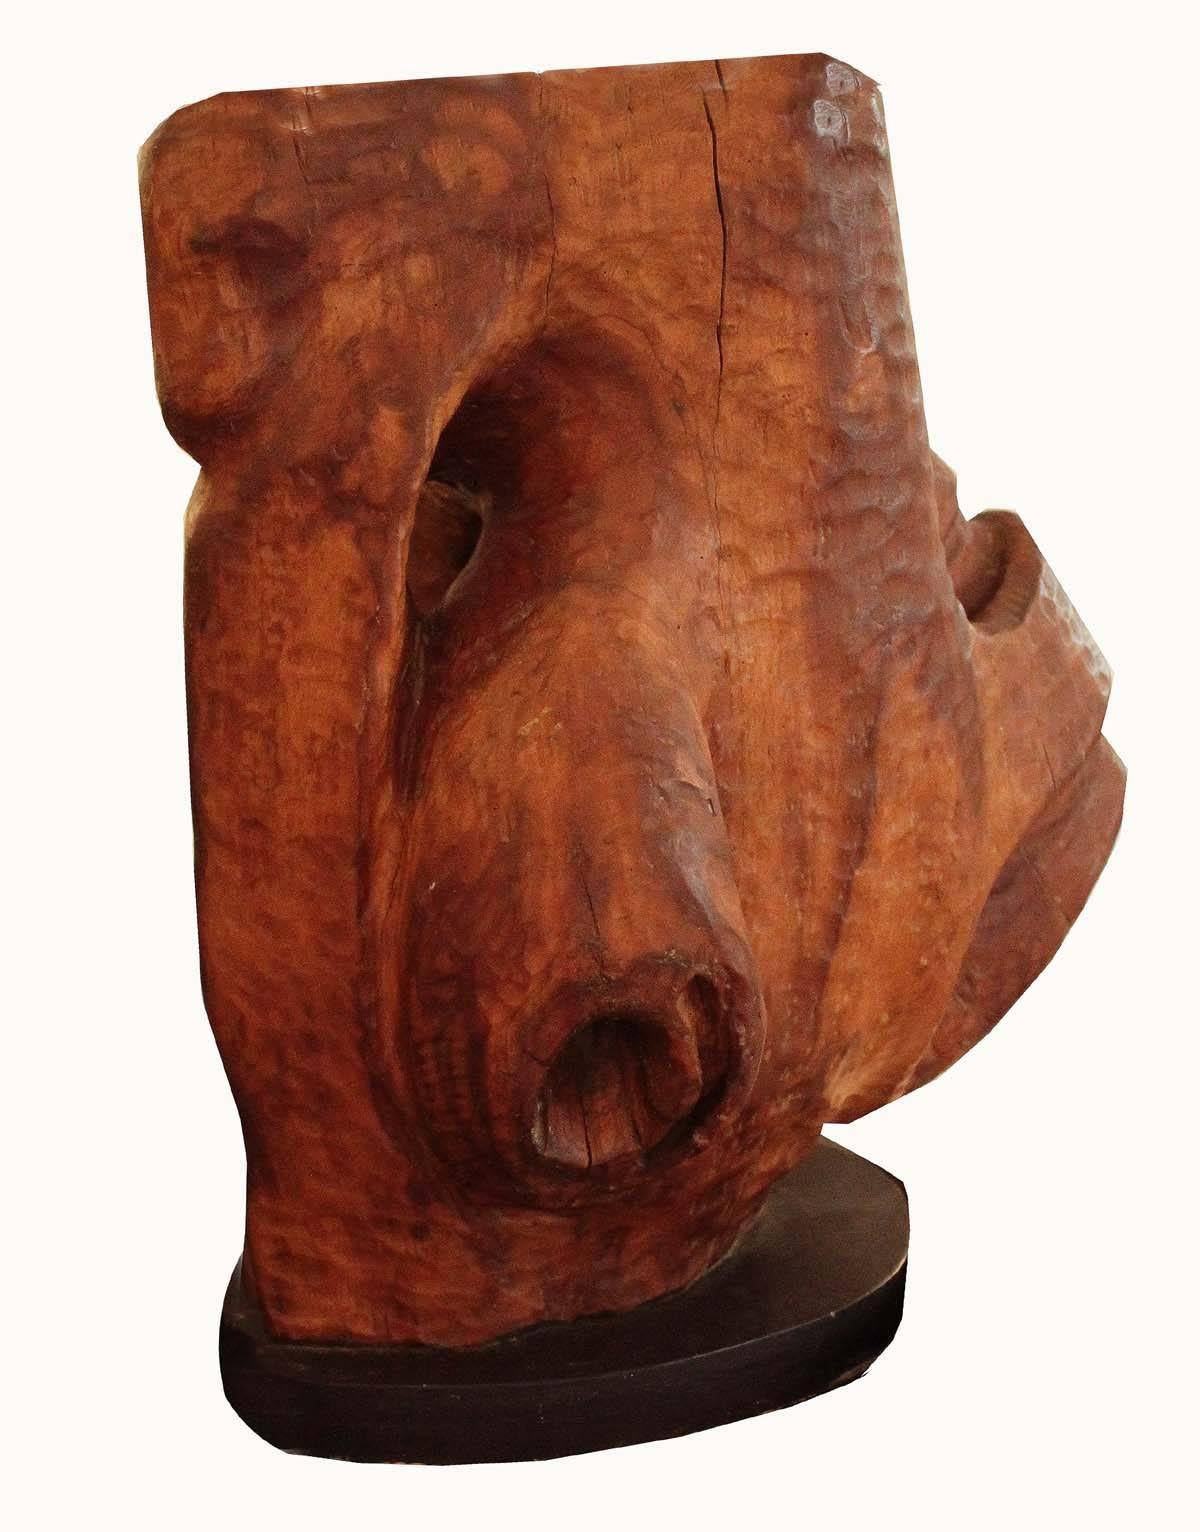 wood sculptures for sale